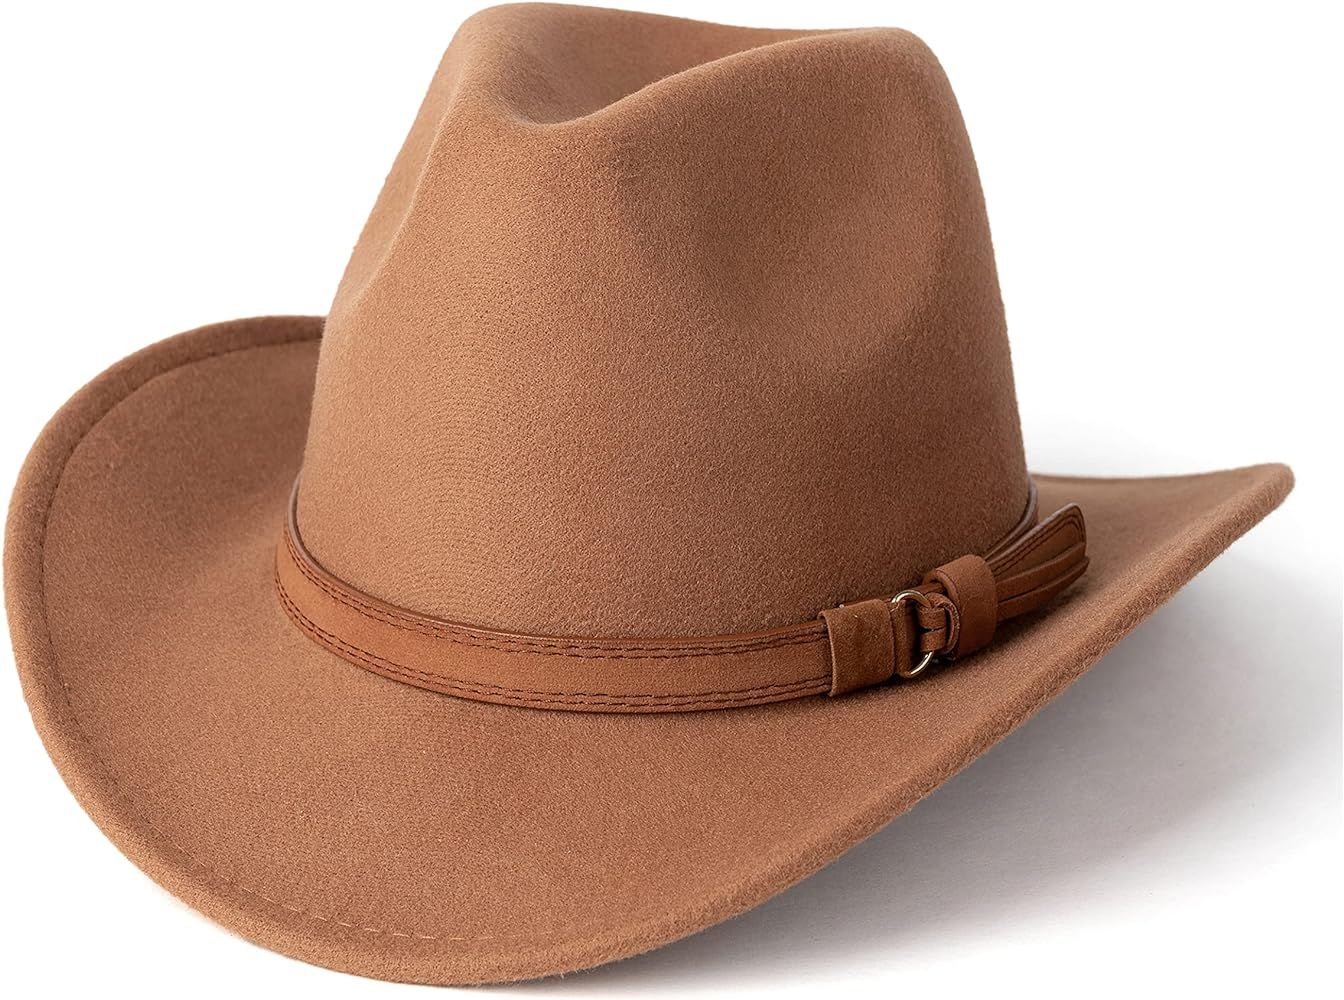 Western Cowboy Hat Wide Brim Outdoor Fedora Hat | Amazon (US)